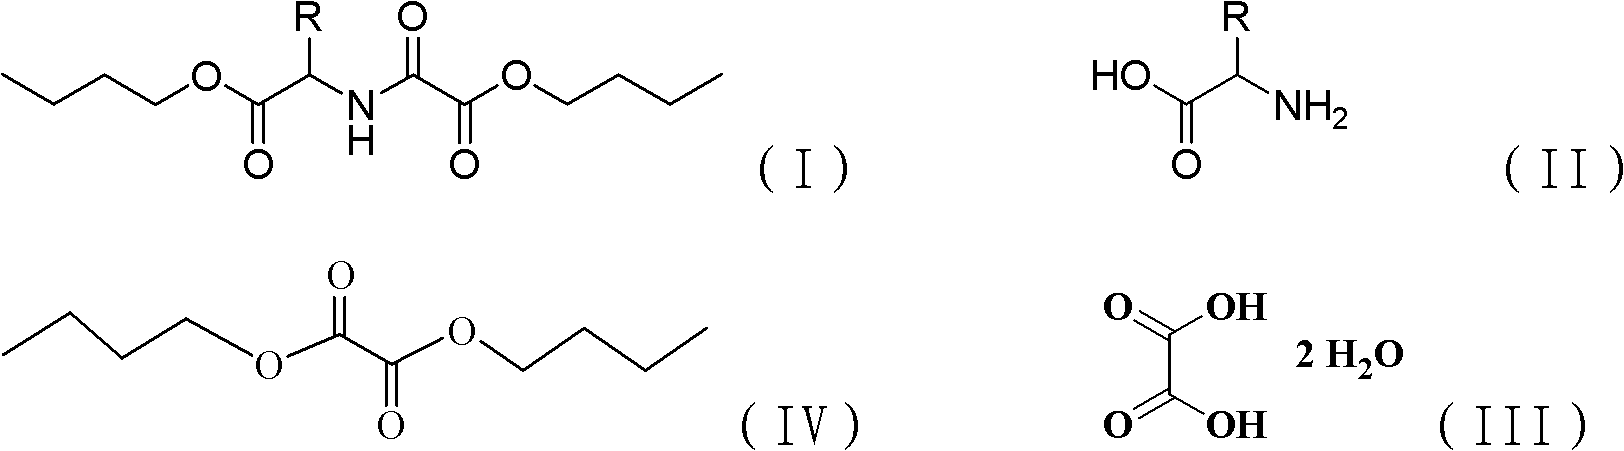 Chemical synthesis method of N-butoxyoxalyl amino acid butyl ester